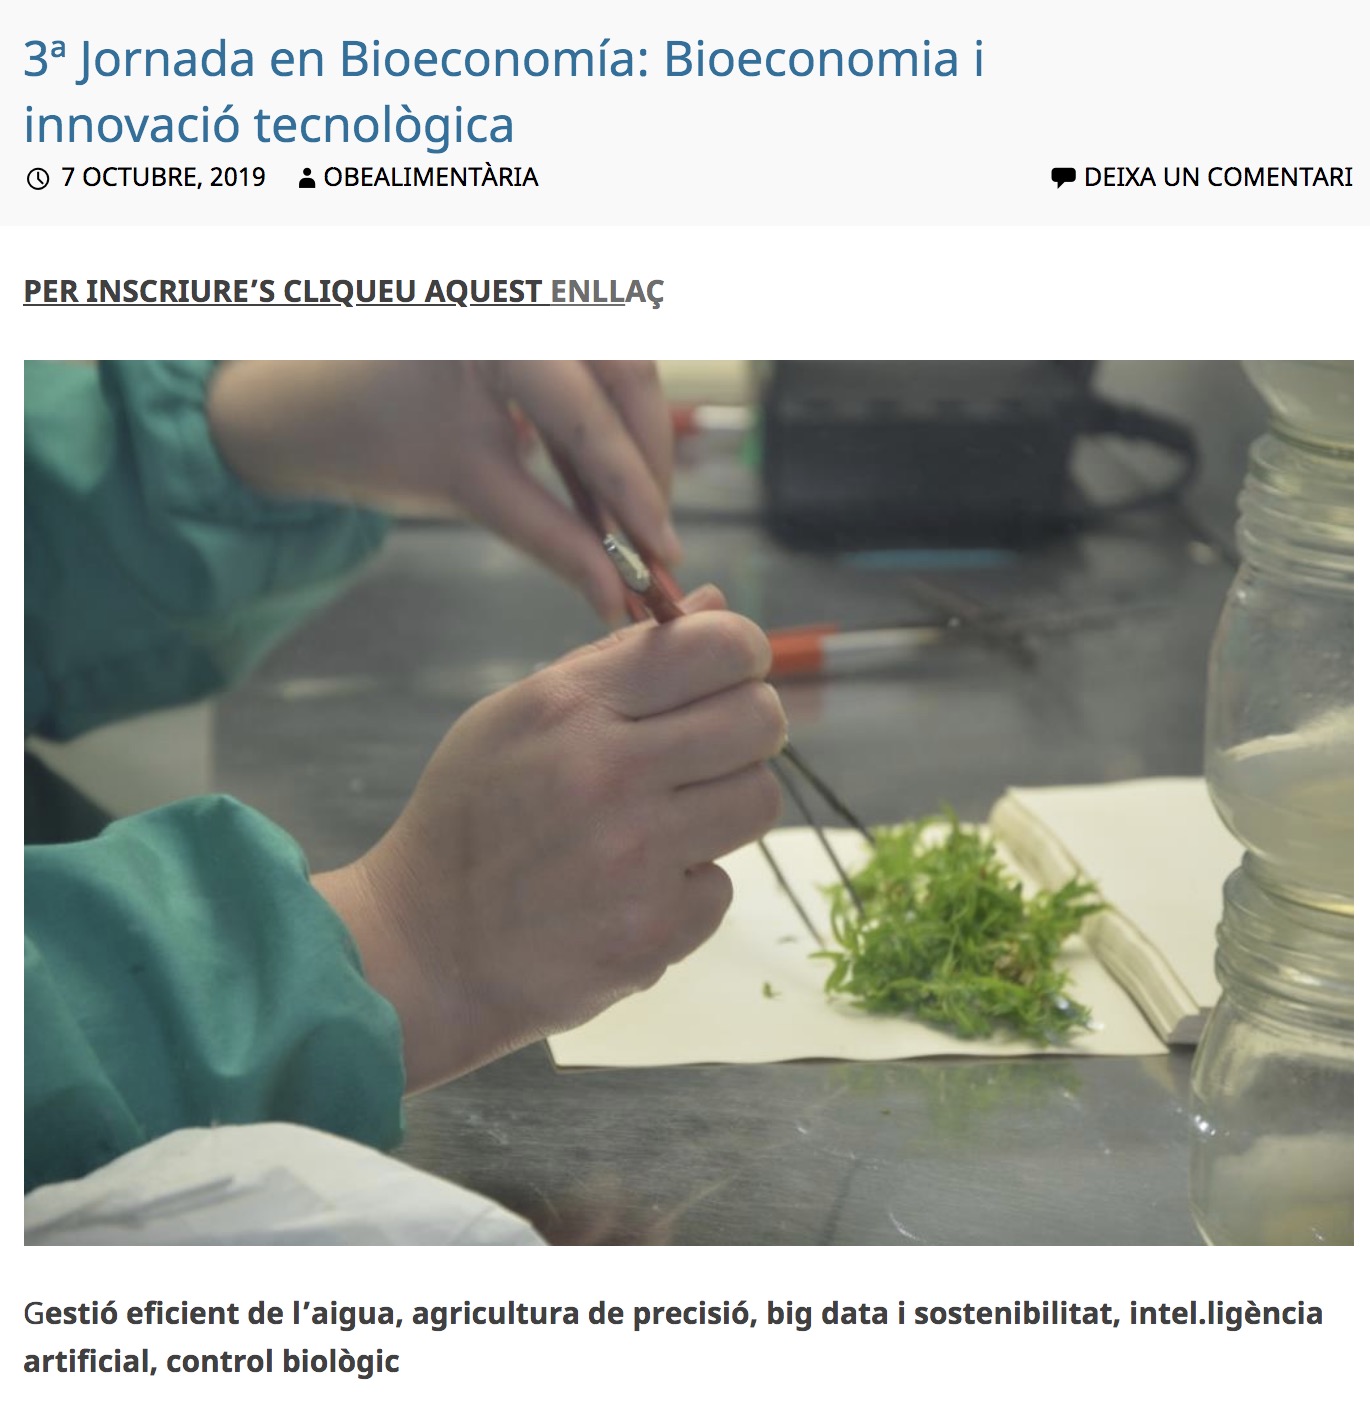 3ª Jornada en Bioeconomía: Bioeconomia i innovació tecnològica